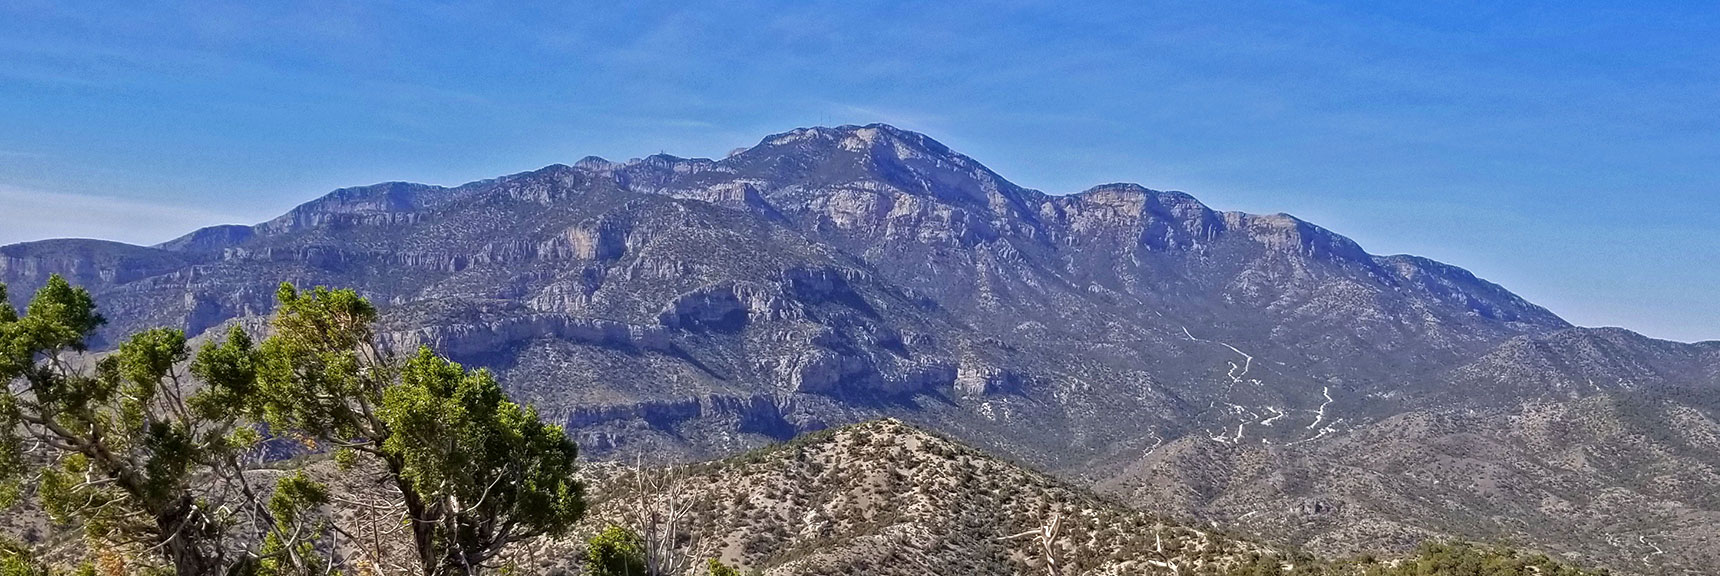 Potosi Mountain South of High Ridgeline, Across Hwy 160 | Windy Peak | Rainbow Mountain Wilderness, Nevada